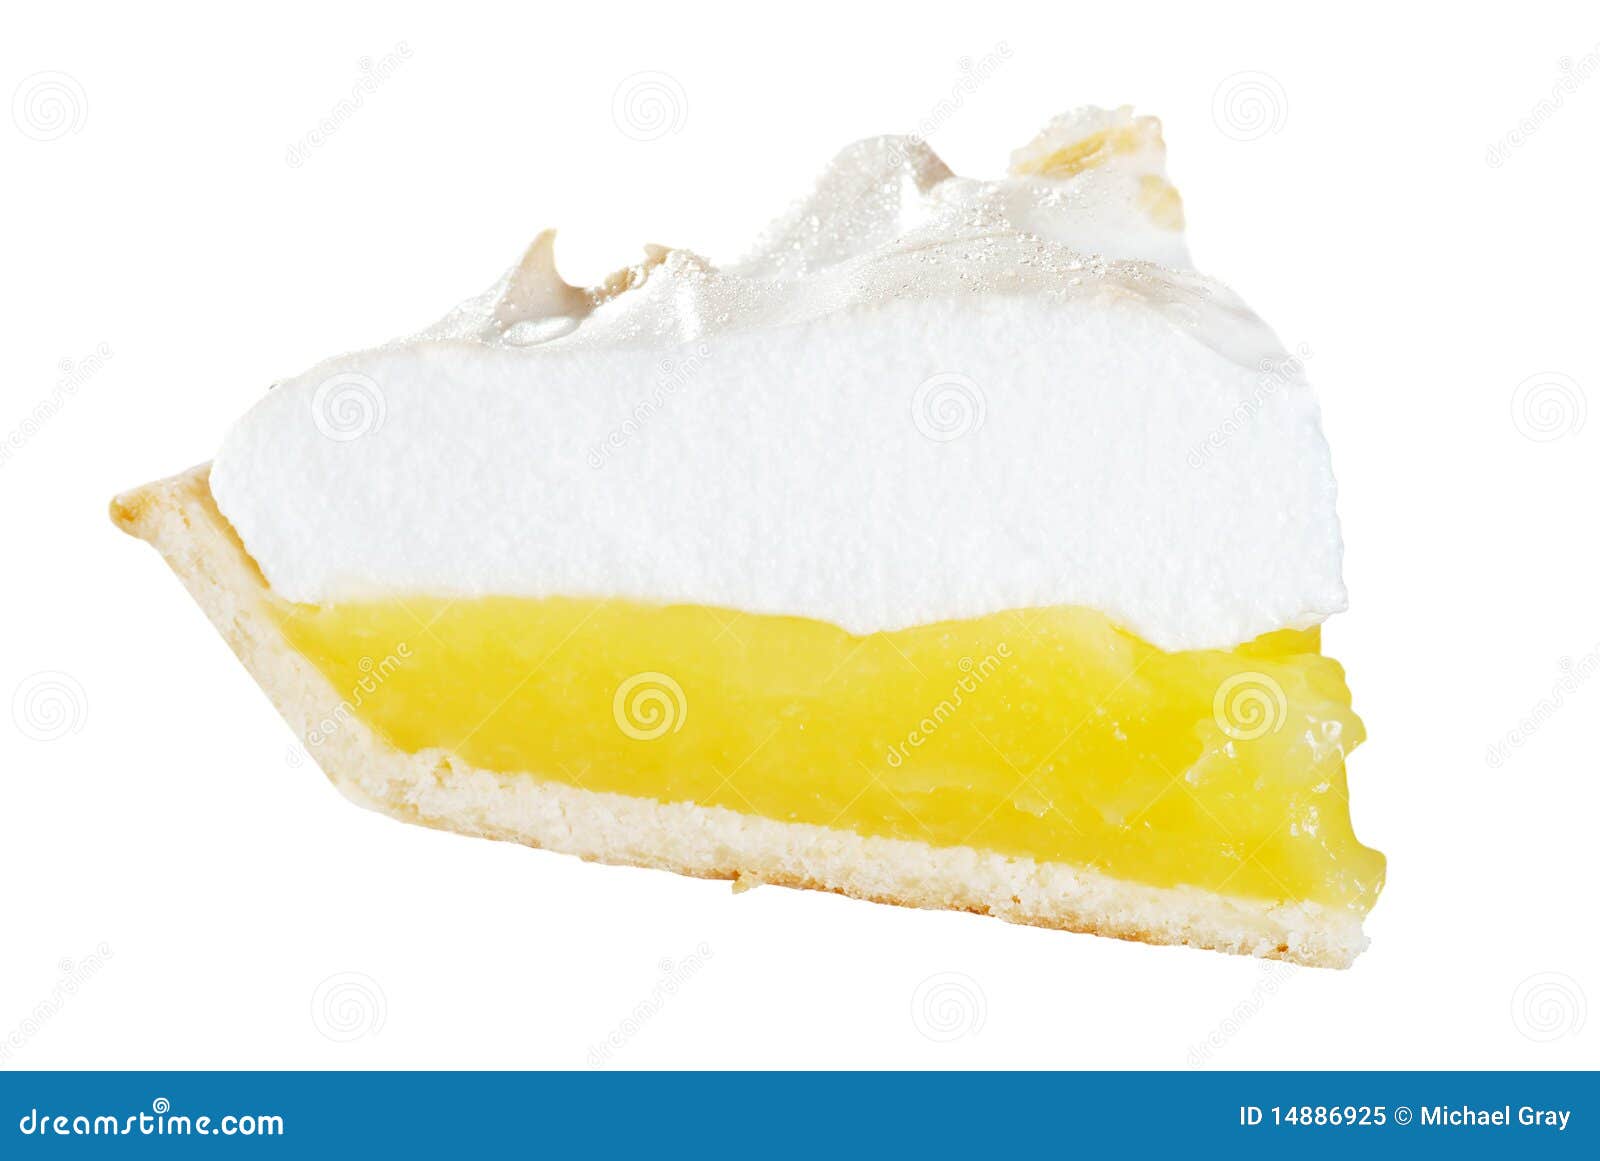 free clip art lemon meringue pie - photo #30